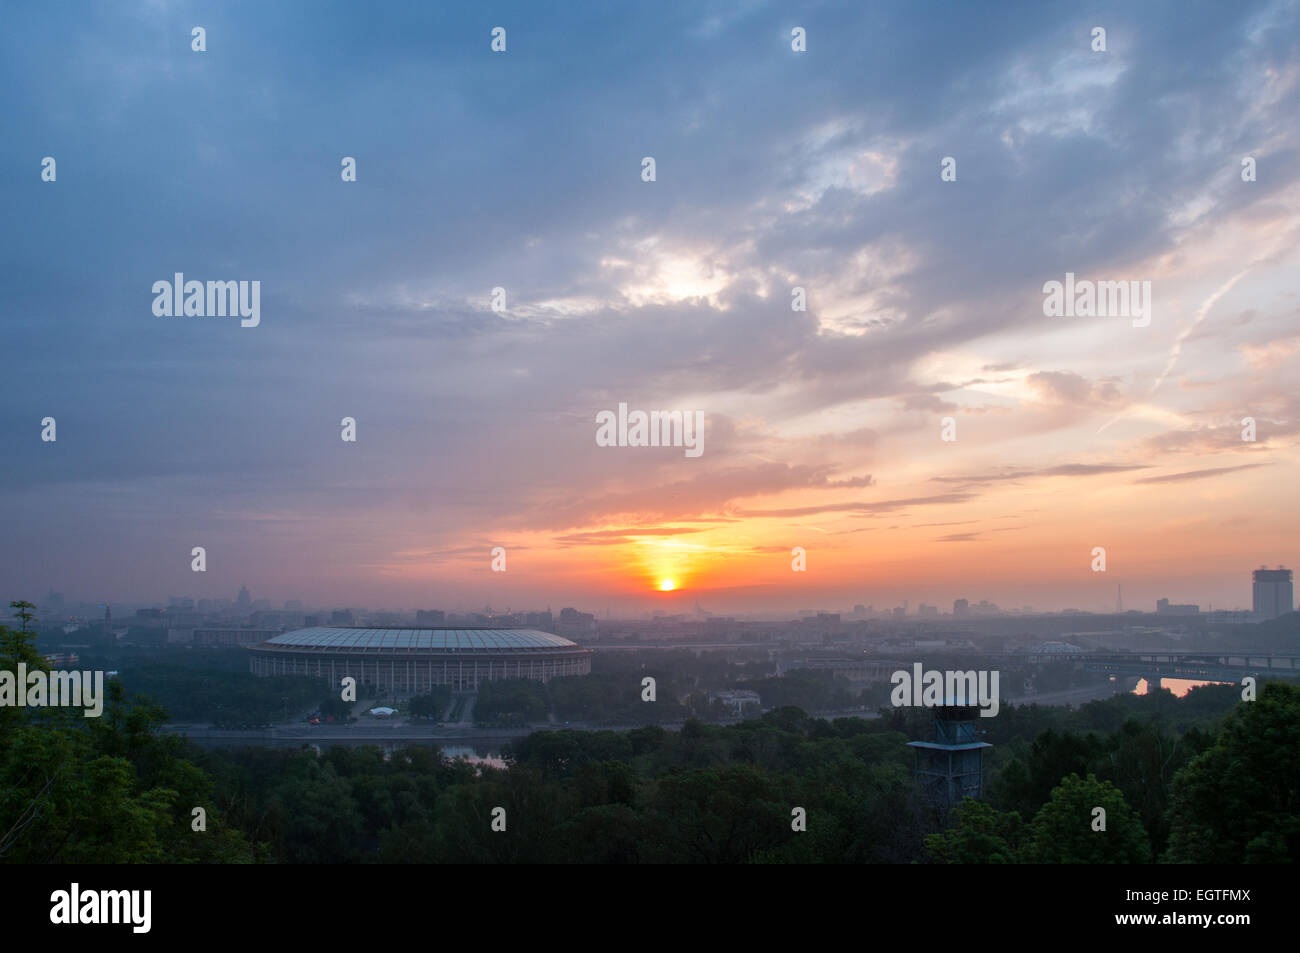 Russia, Moscow, Luzhniki, summer, sunset, aerial view Stock Photo